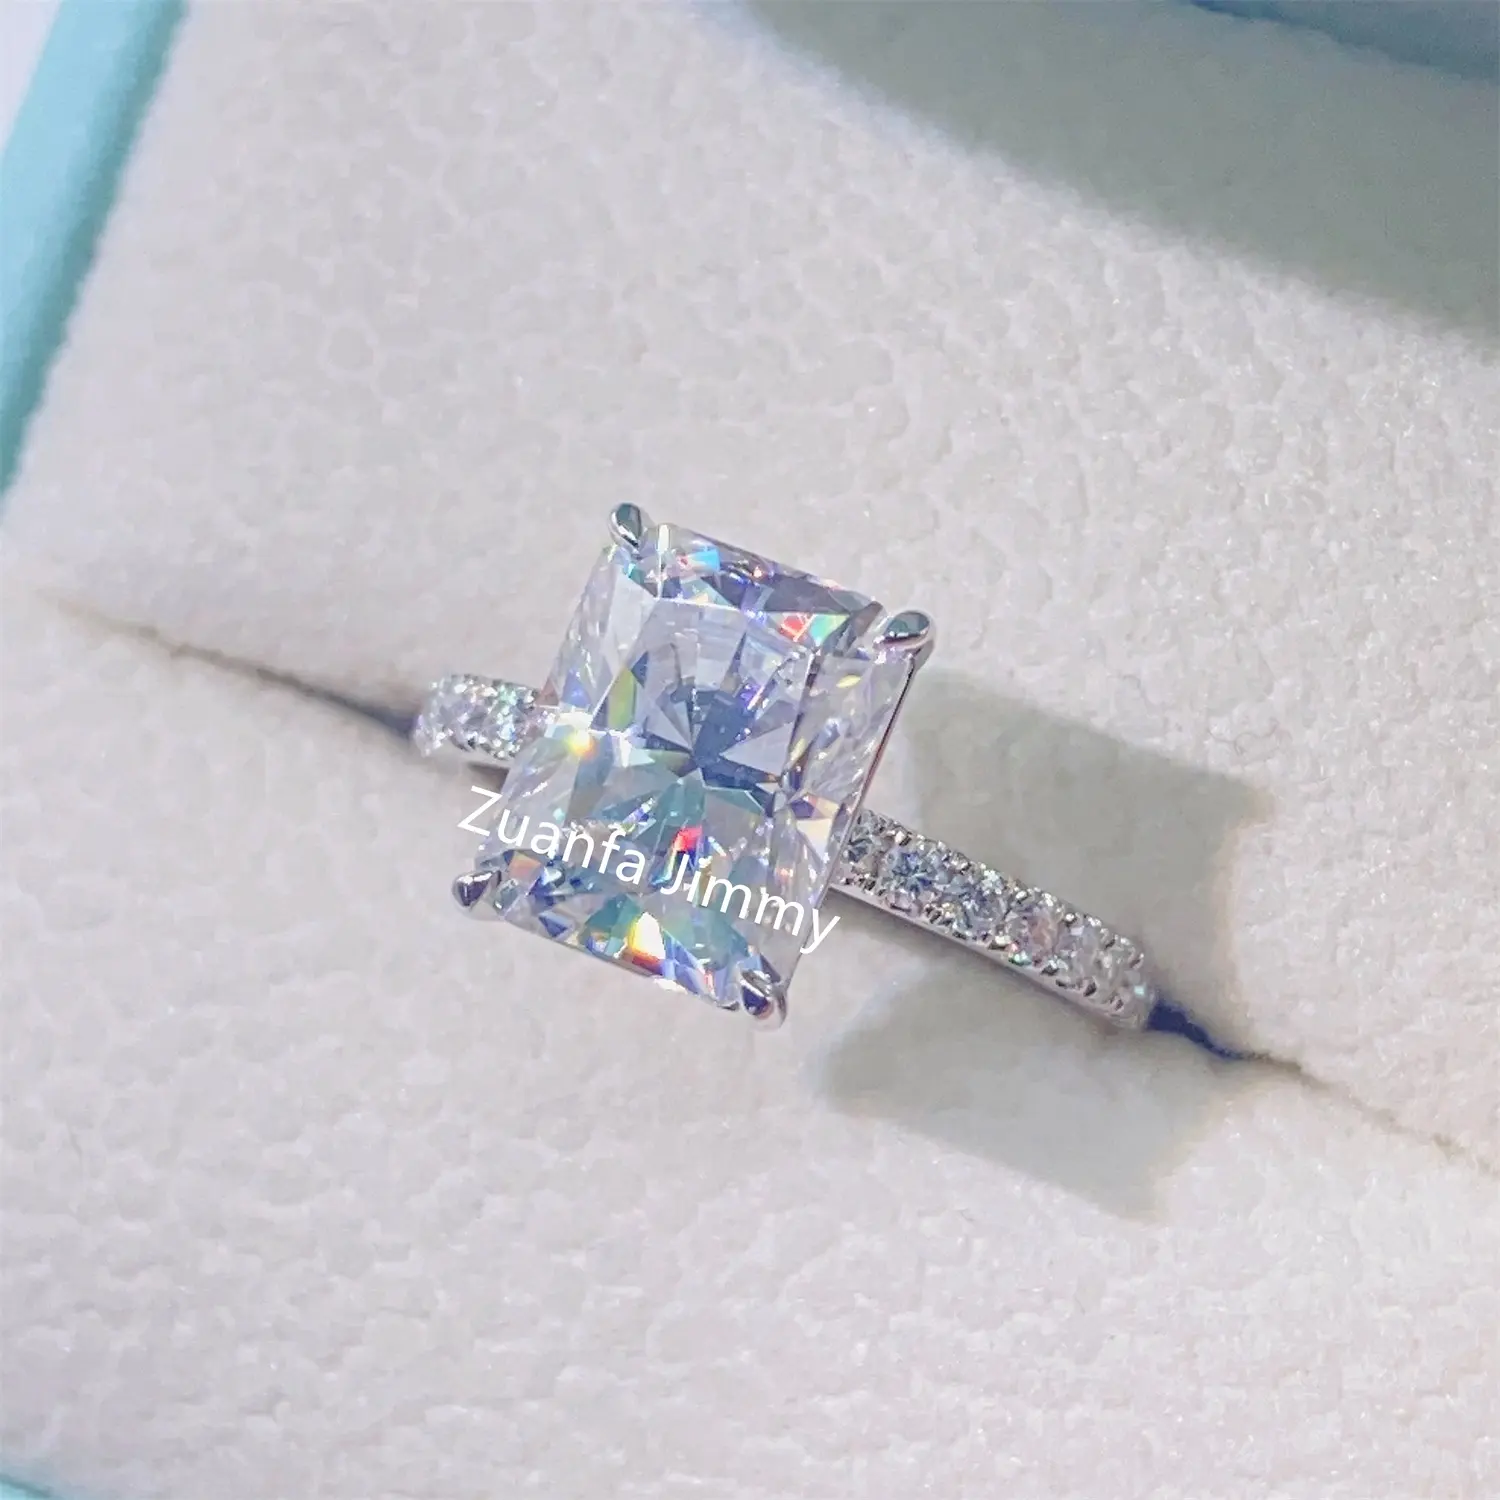 Luxury Classic Style Pass Tester Women Engagement Rings Jewelry 18k White Gold Au750 VVS1 Moissanite Diamond Rings